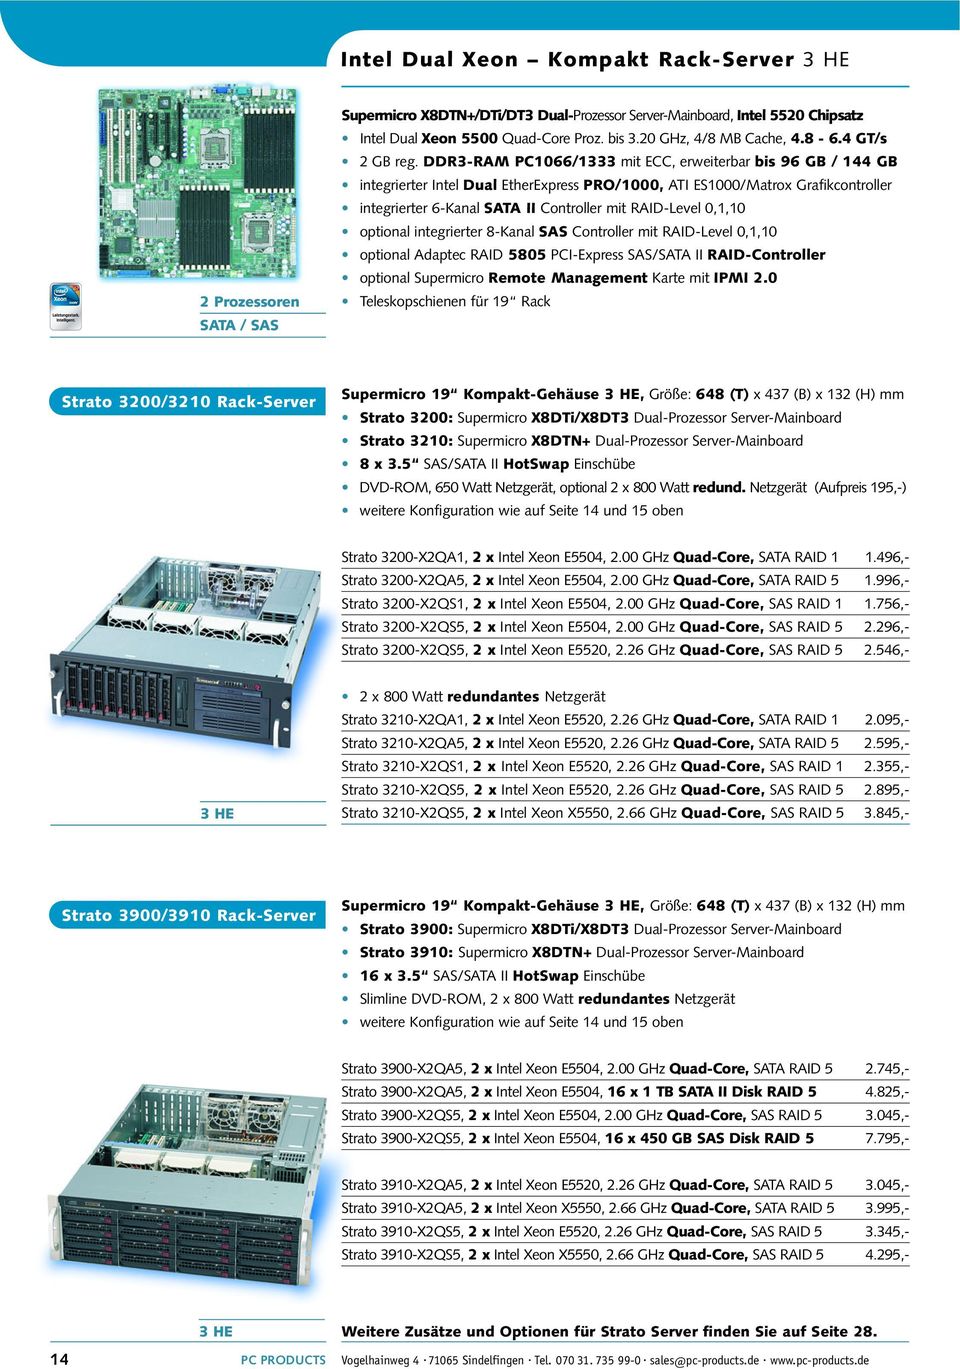 DDR3-RAM PC1066/1333 mit ECC, erweiterbar bis 96 GB / 144 GB integrierter Intel Dual EtherExpress PRO/1000, ATI ES1000/Matrox Grafikcontroller integrierter 6-Kanal SATA II Controller mit RAID-Level